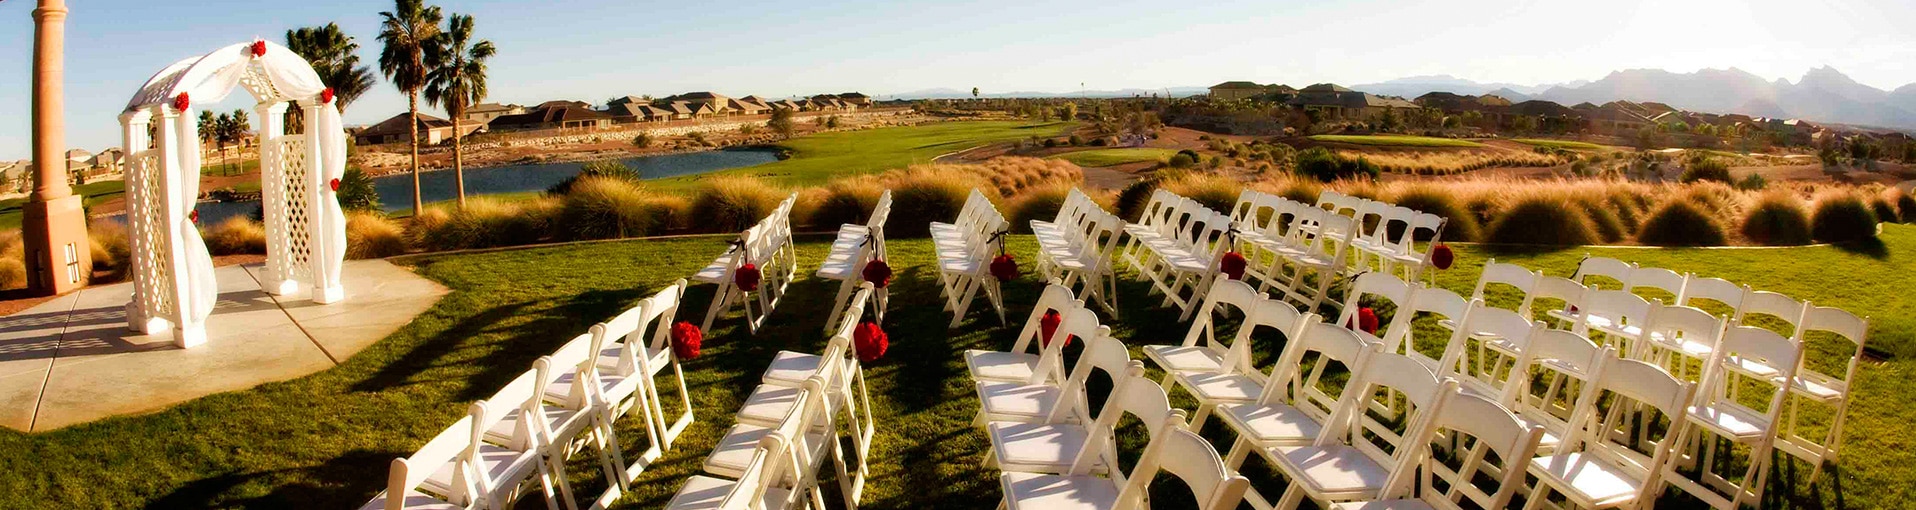 Chairs set up at a las vegas golf course wedding venue